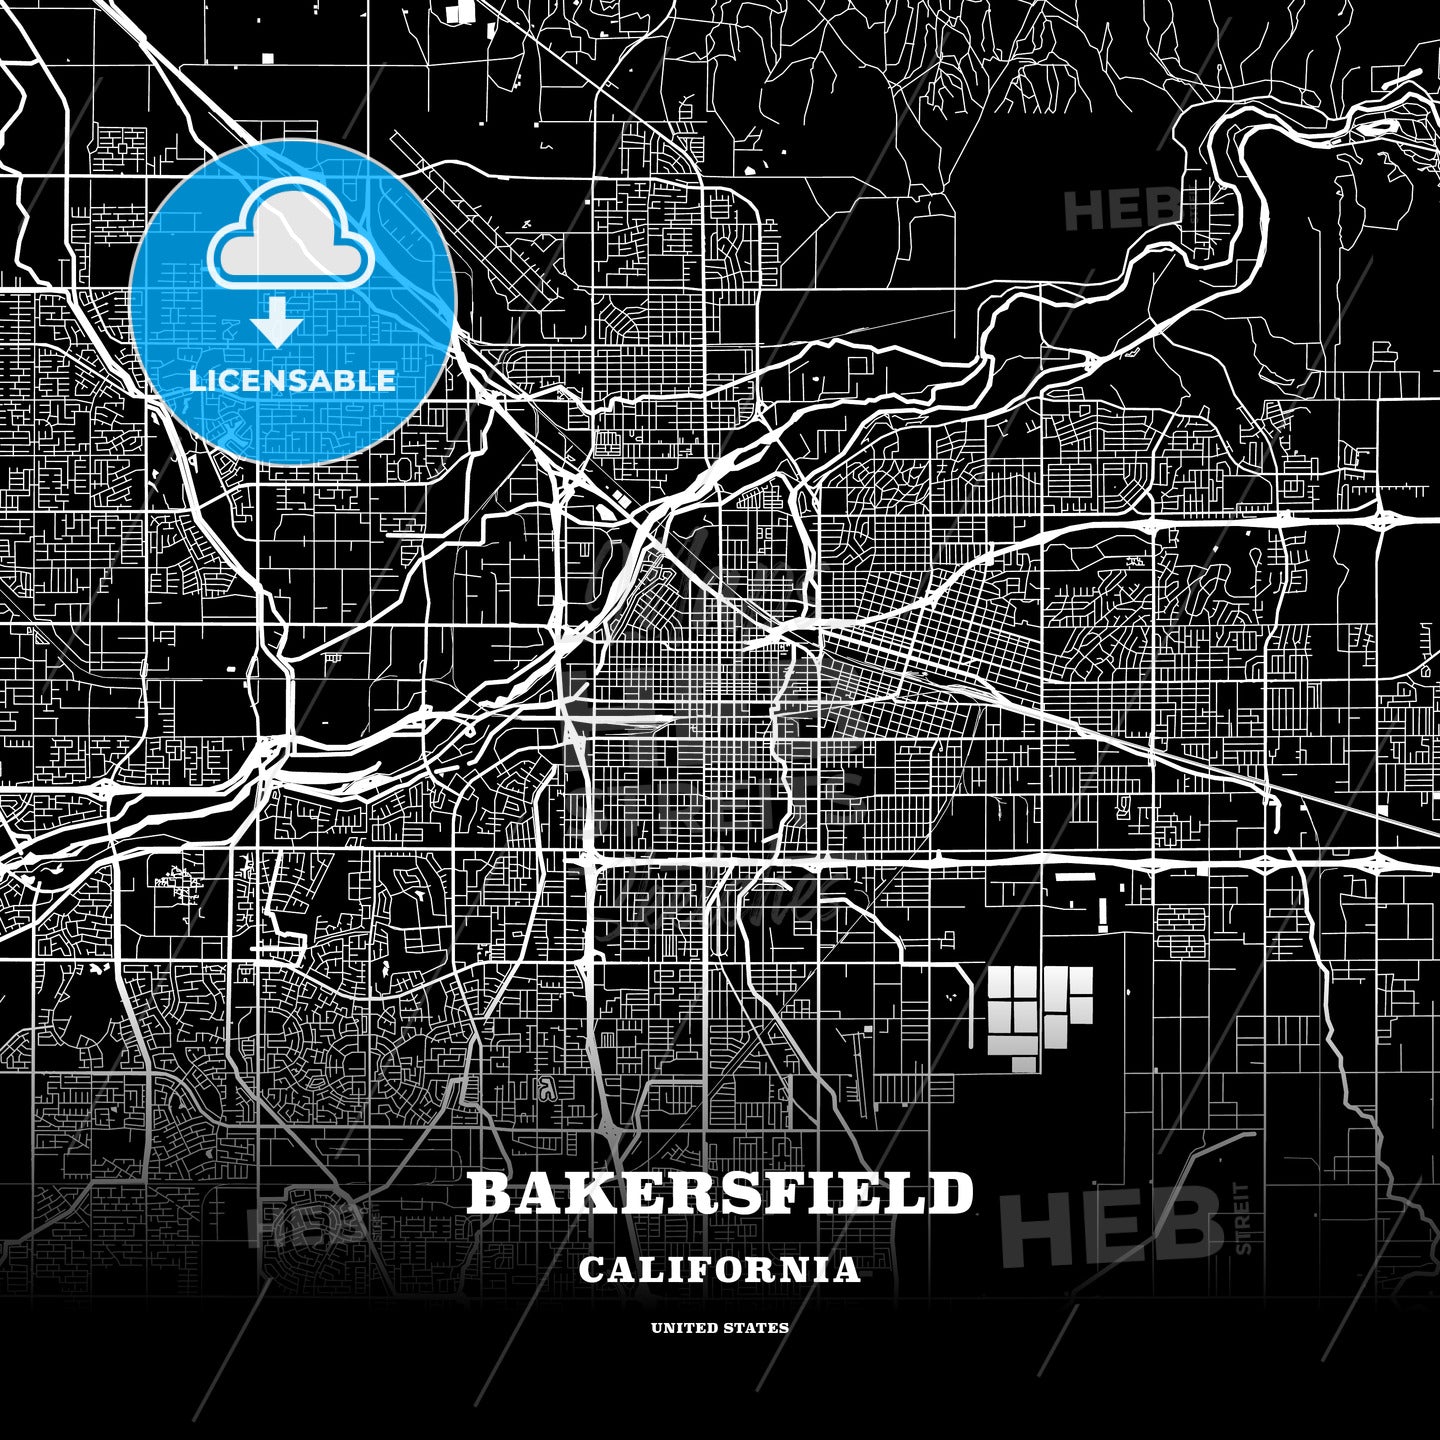 Bakersfield, California, USA map